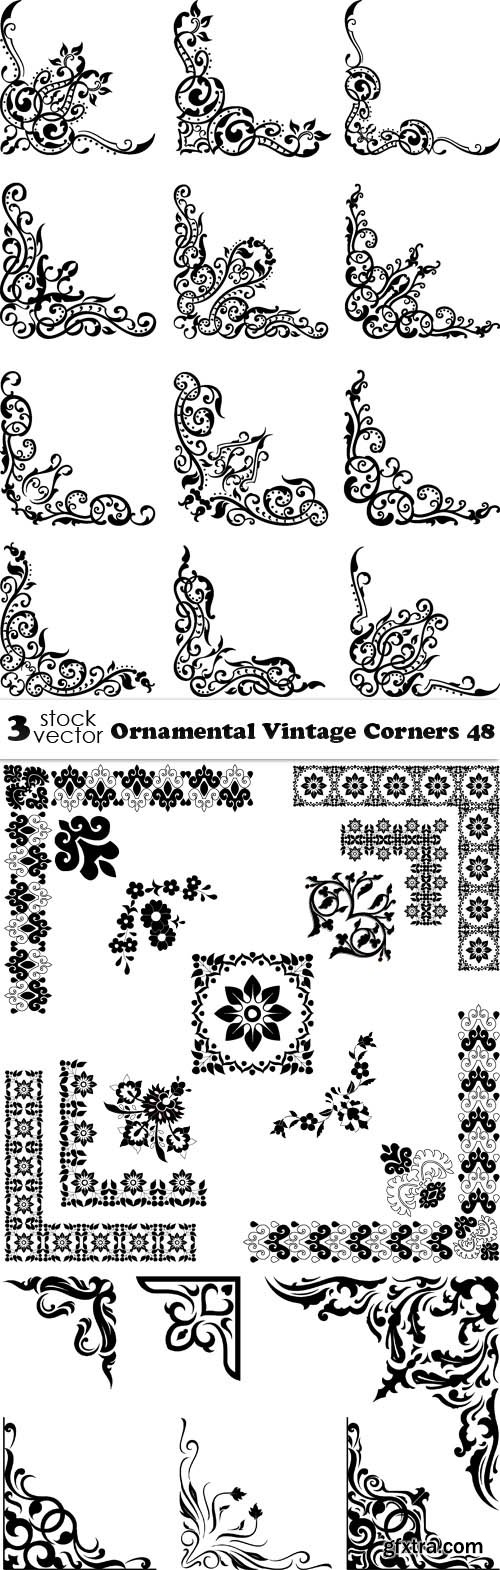 Vectors - Ornamental Vintage Corners 48